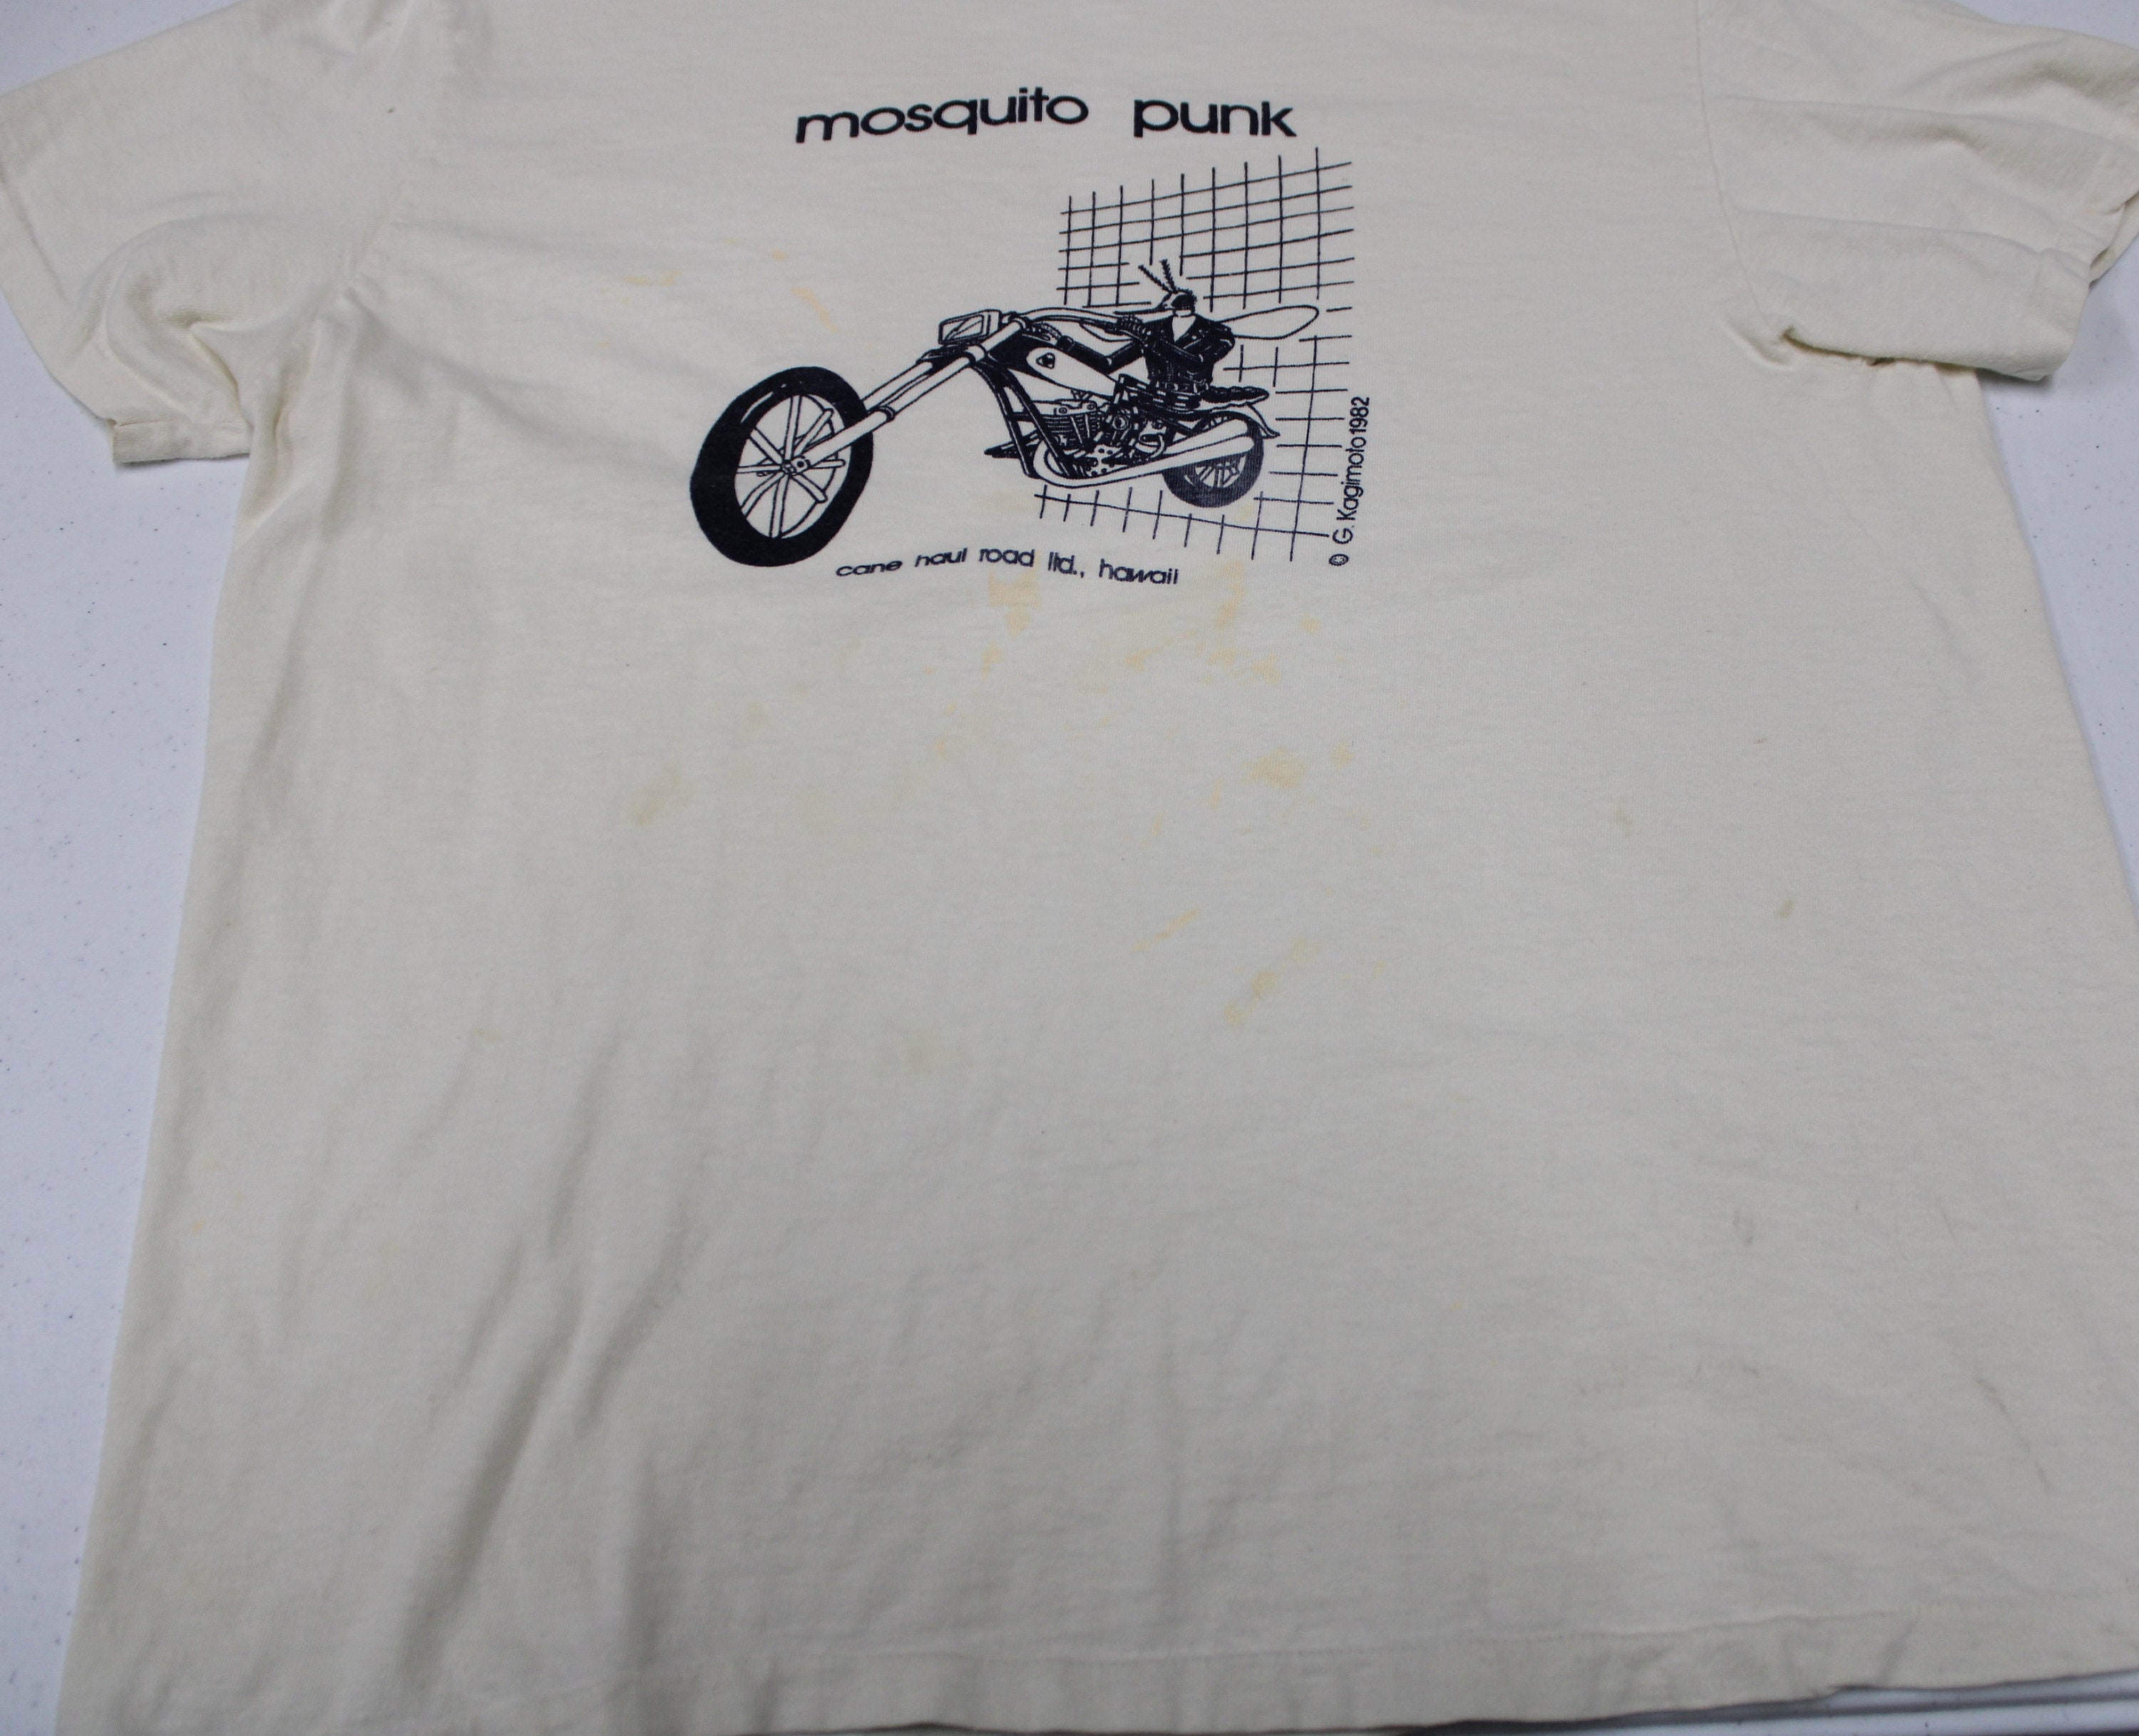 Vintage Graphic T-shirt / Mosquito Punk / G. Kagimoto 1982 | Etsy